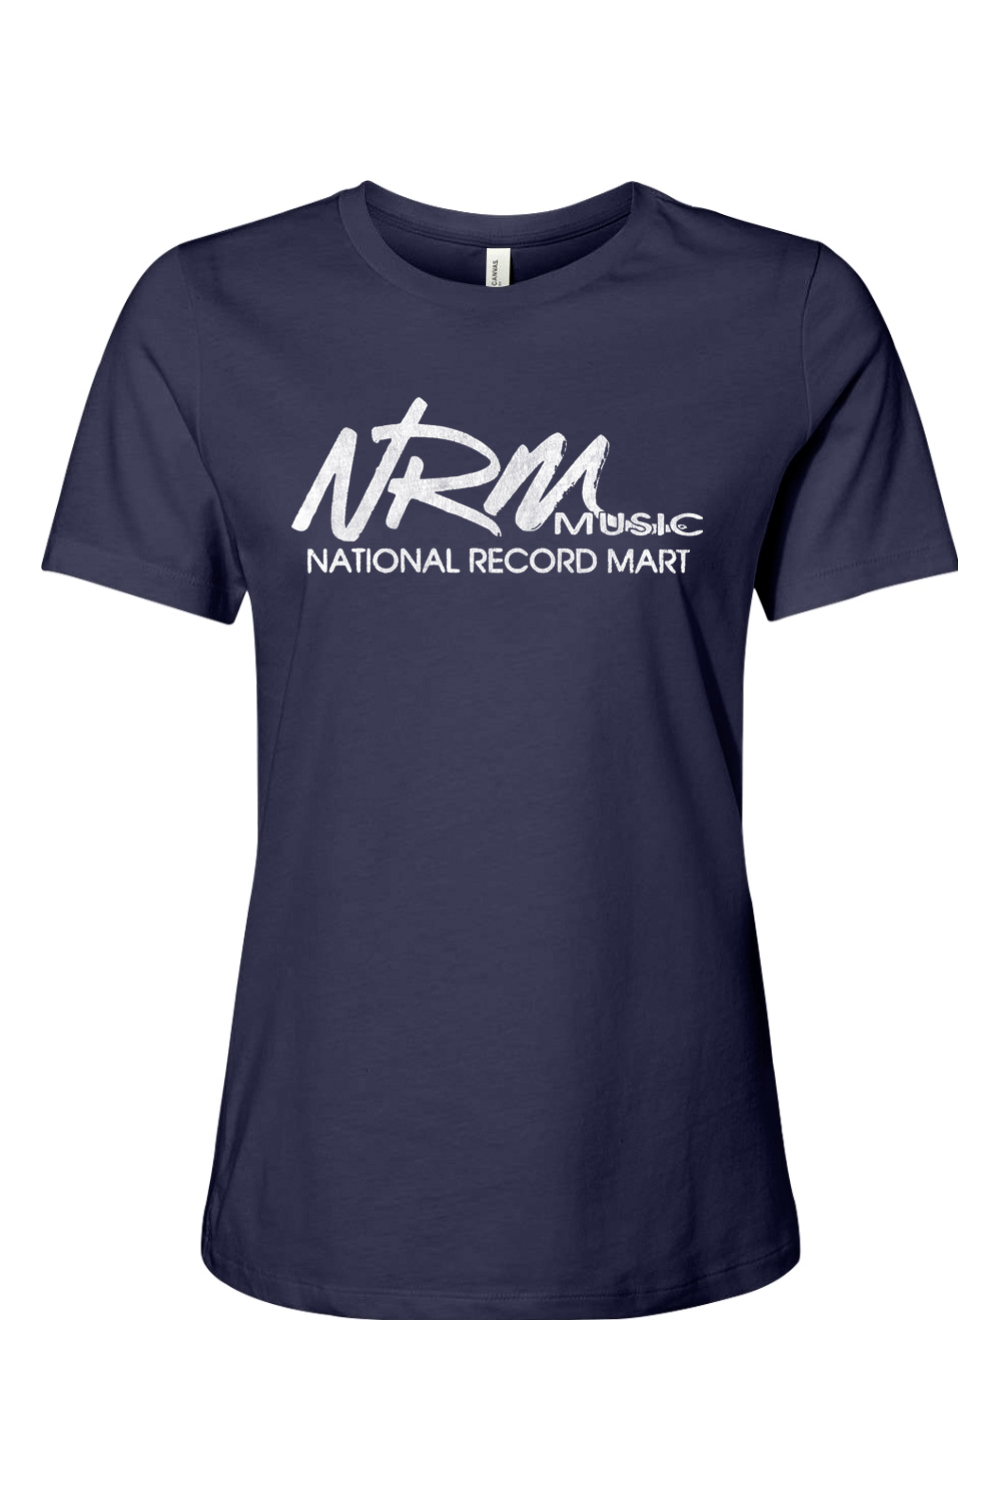 NRM - National Record Mart - Ladies Tee - Yinzylvania